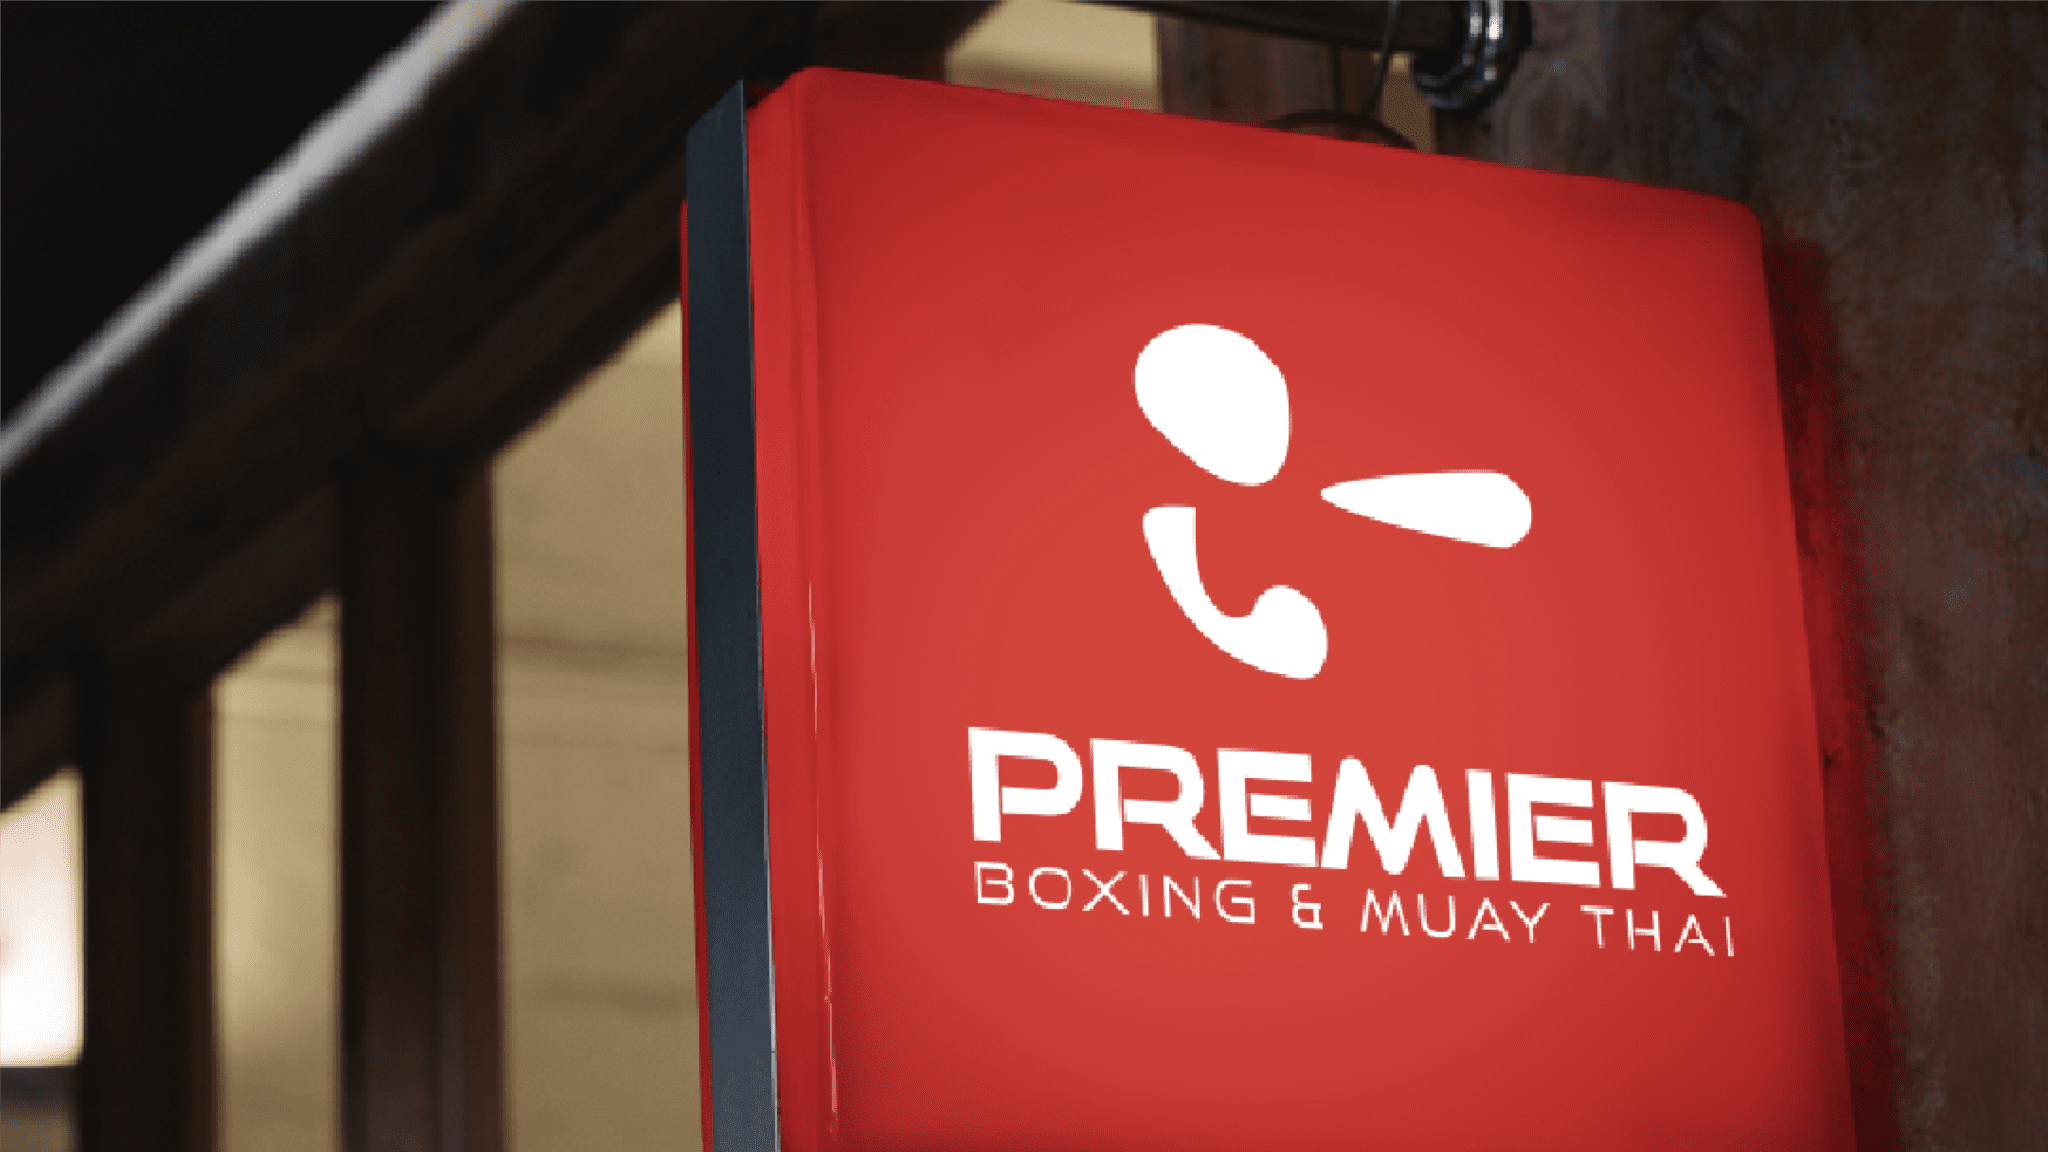 Premier Boxing – Brand Artefacts in Premises